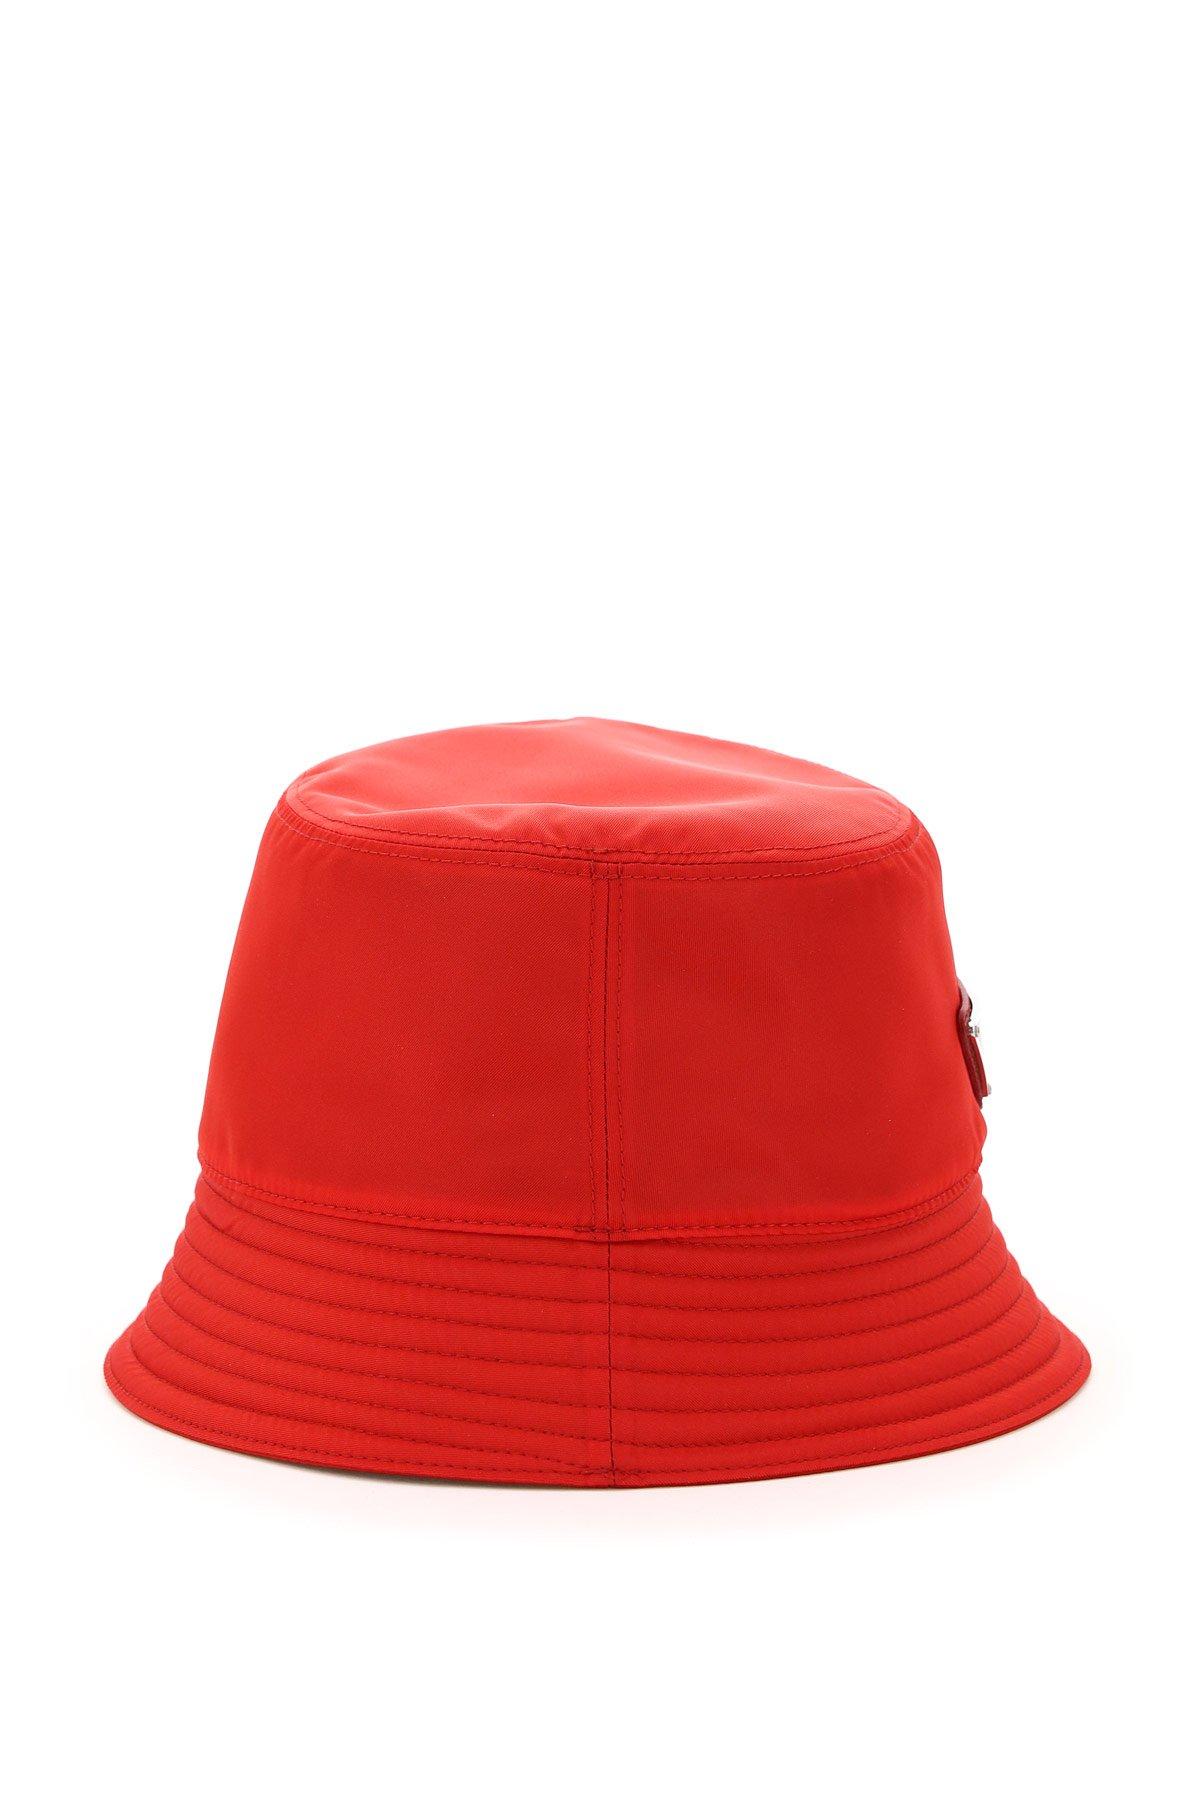 Prada Synthetic Bucket Hat in Red for Men - Lyst